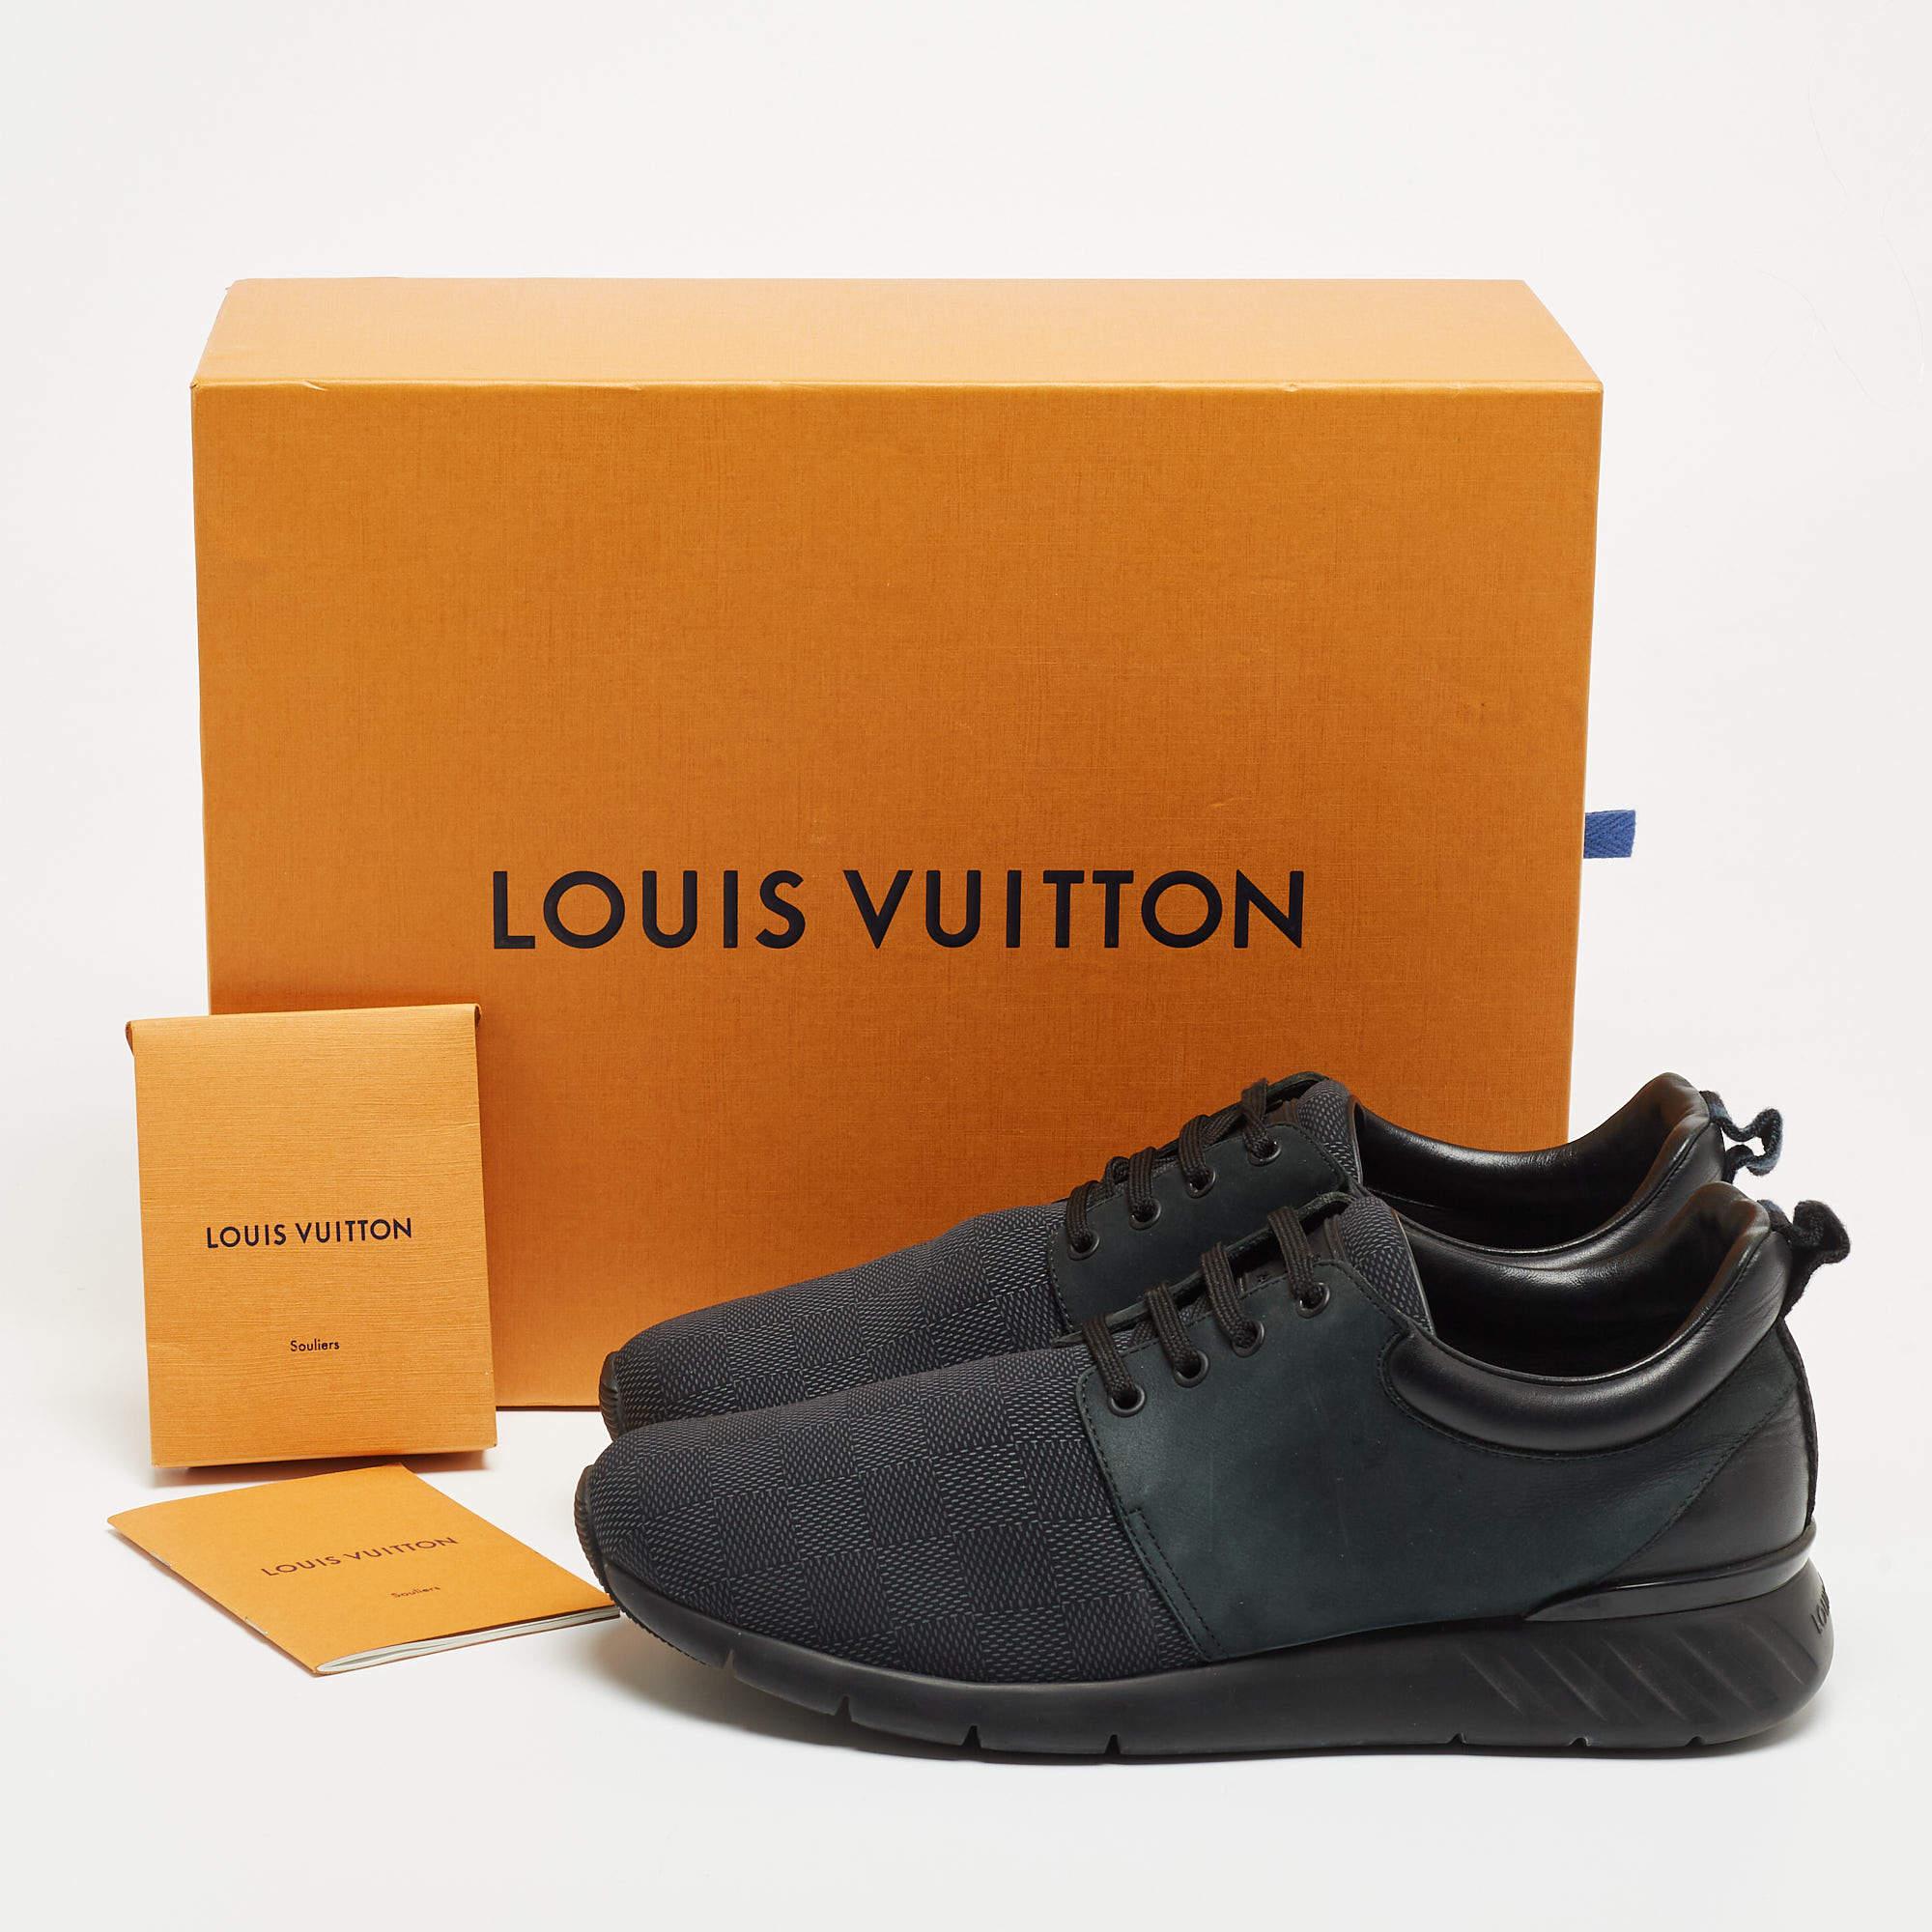 Louis Vuitton Black/Green Leather and Nylon Fastlane Sneakers Size 41 4